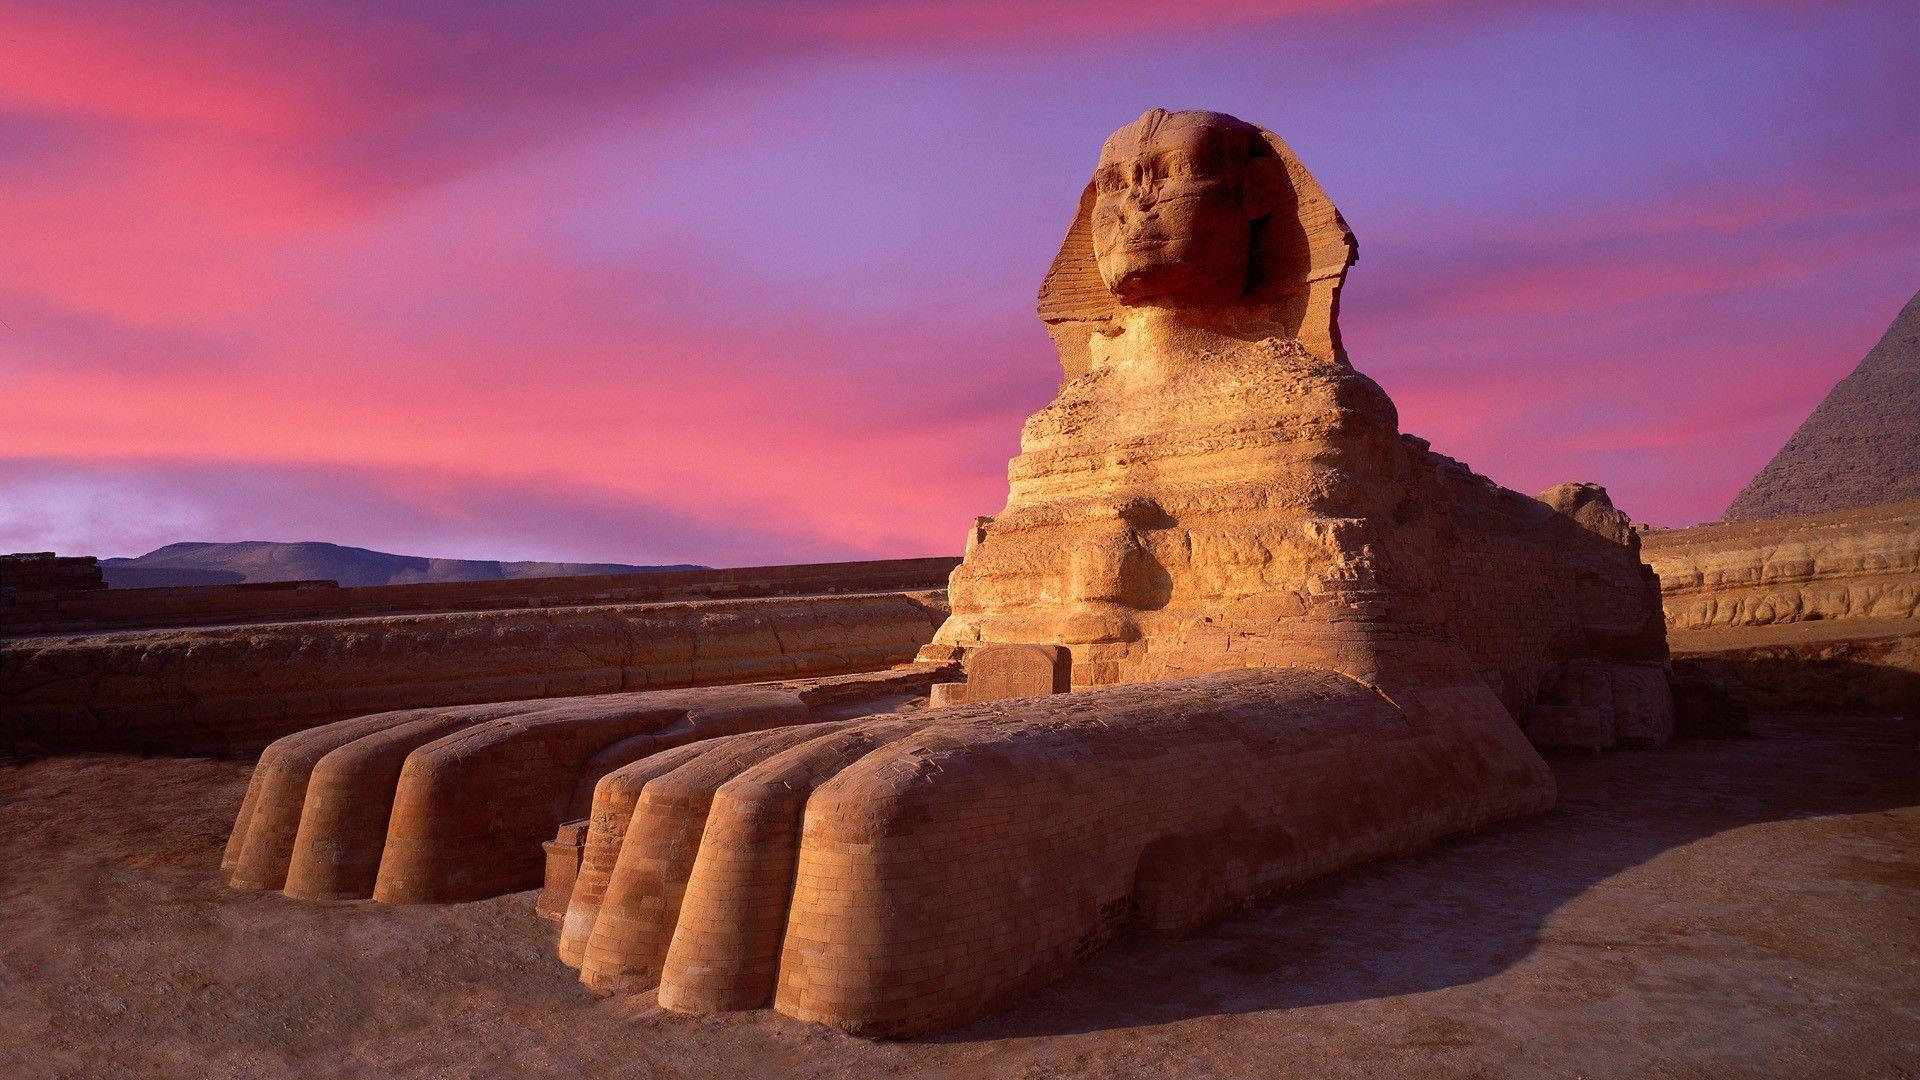 The Sphinx Egypt Wallpaper 1920x1080. Hot HD Wallpaper